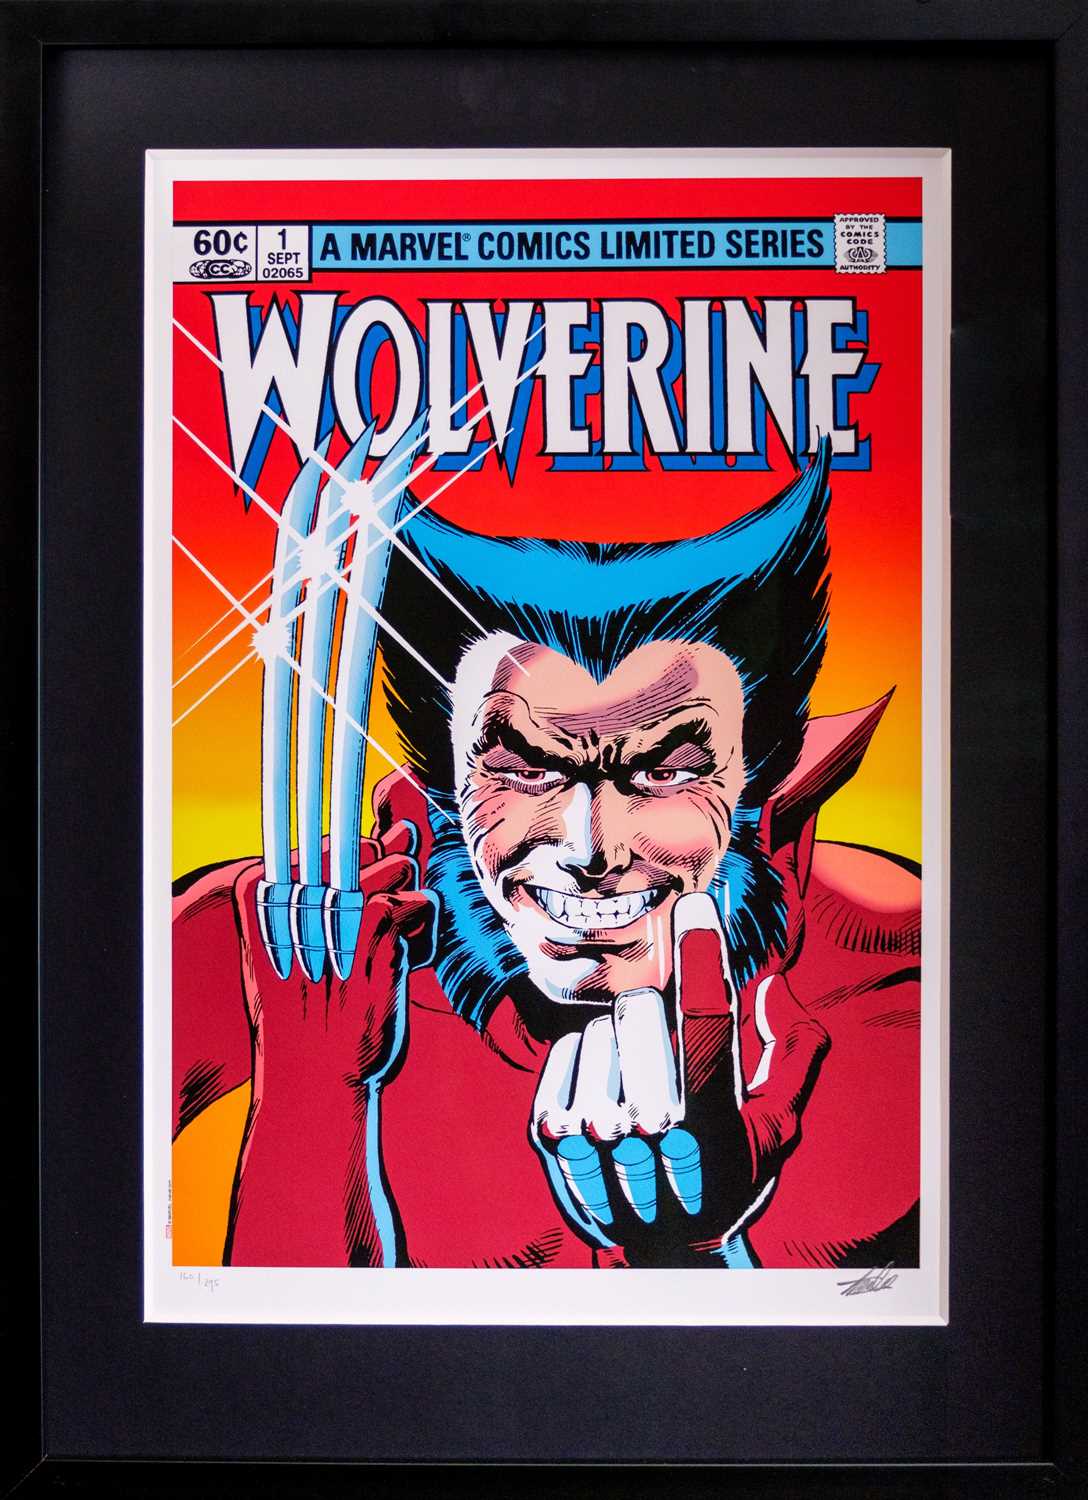 (Signed) Stan LEE (1922-2018) Wolverine #1 (2016) - Image 2 of 5